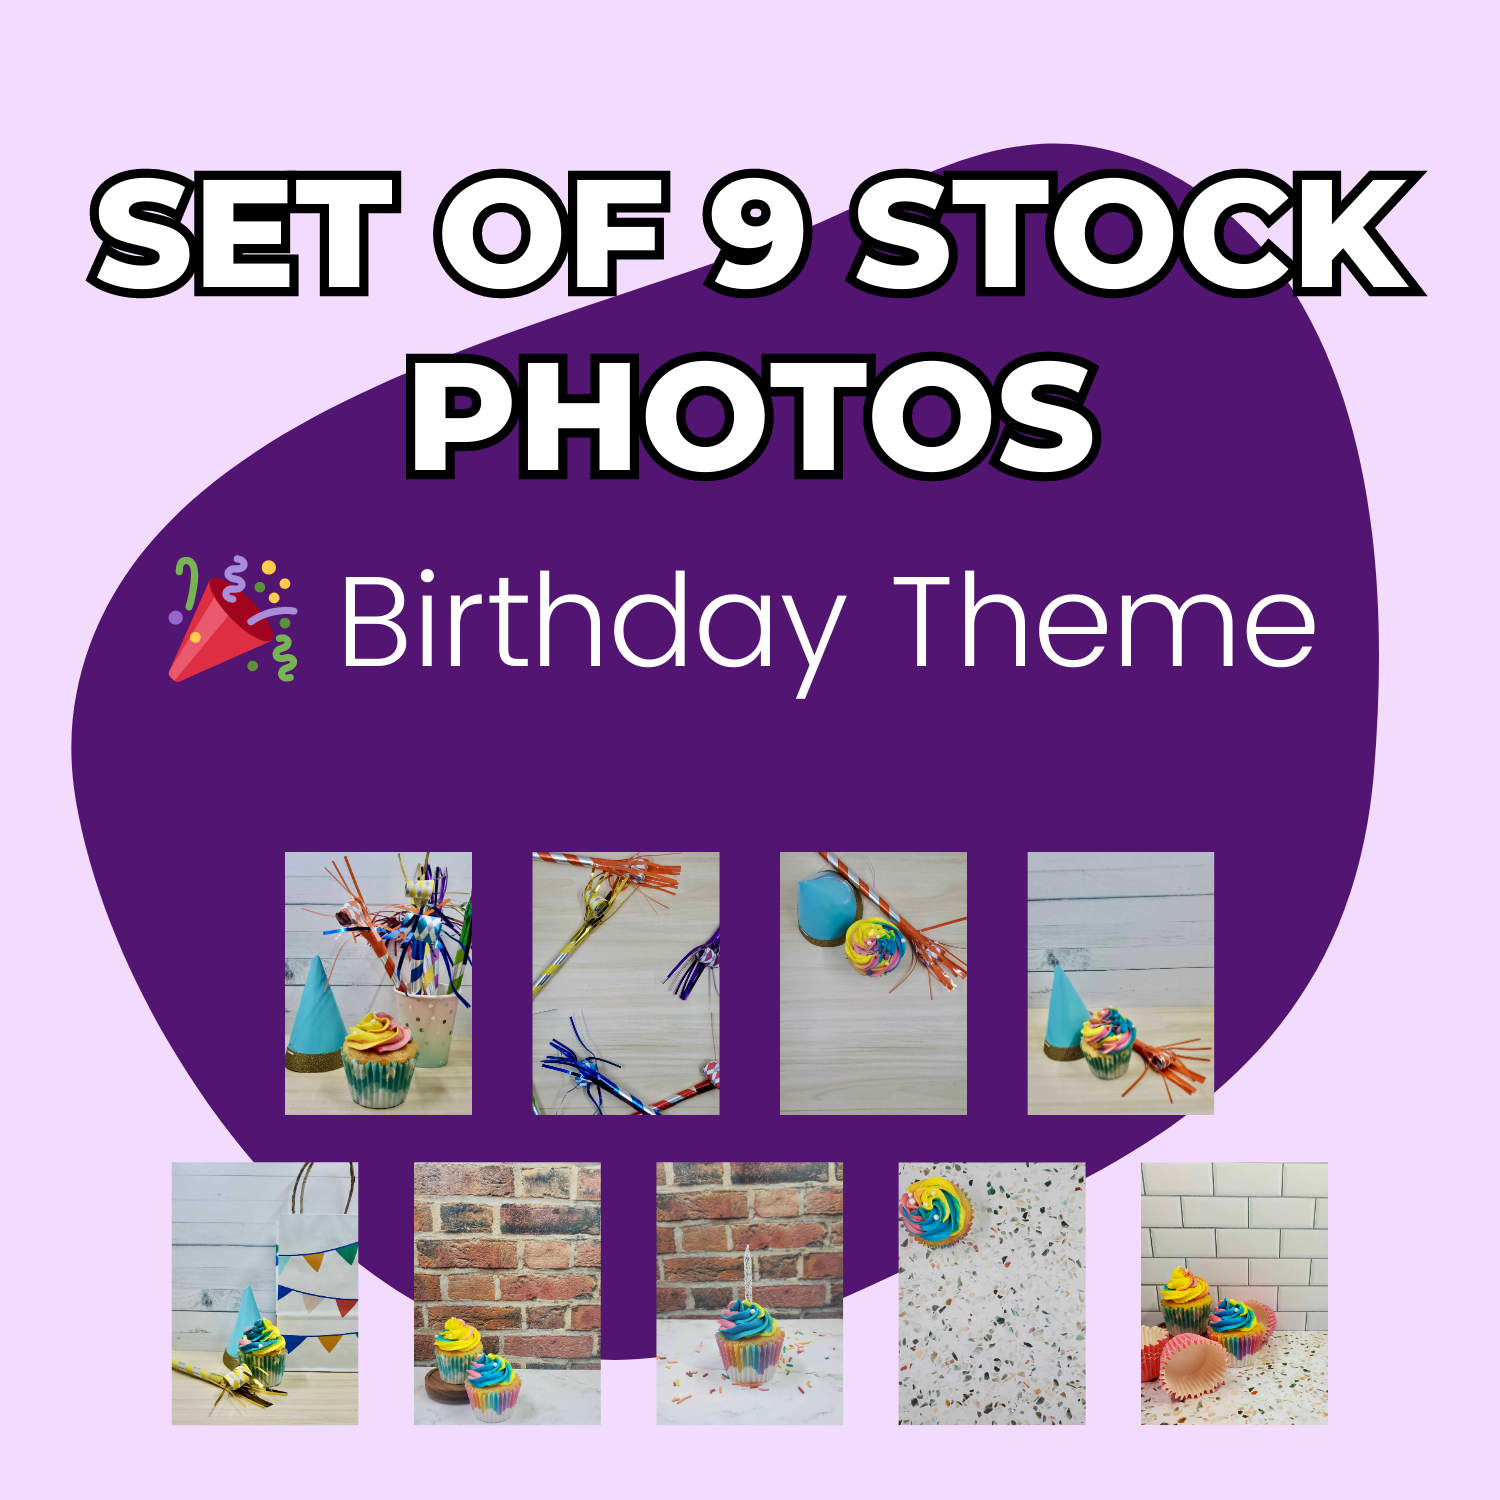 Birthday Themed Stock Photos (set of 9)